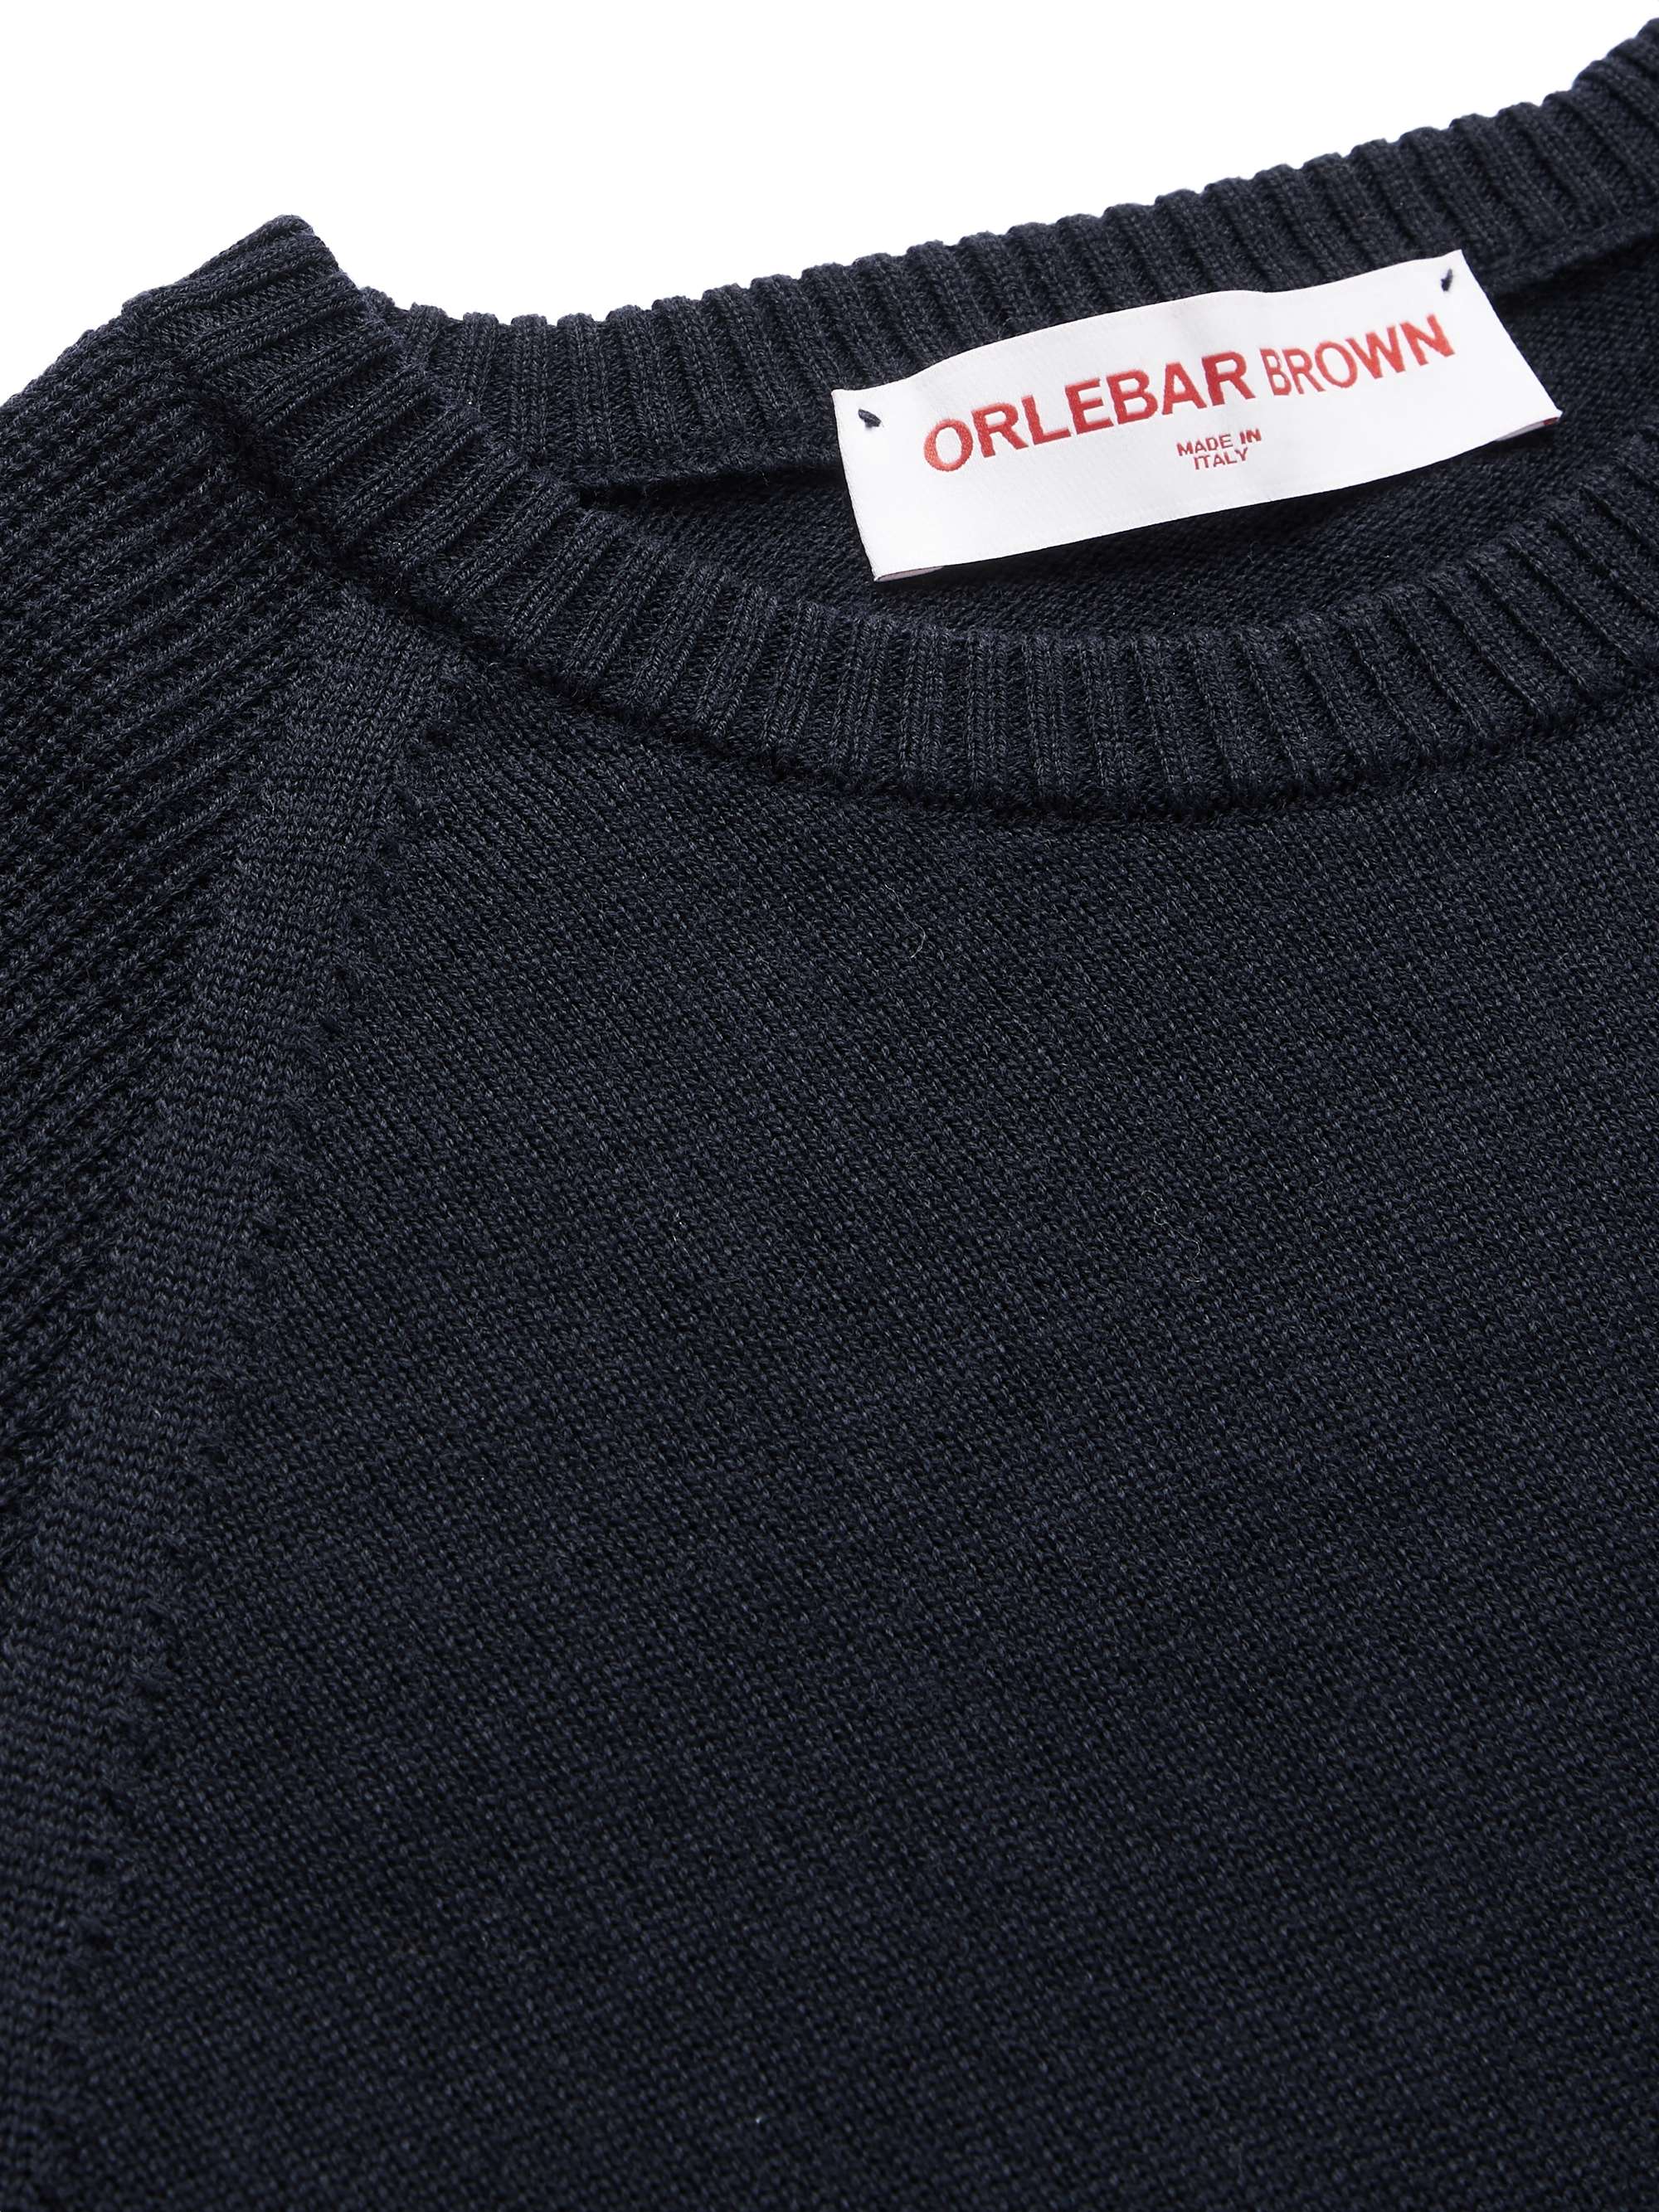 ORLEBAR BROWN Ethan Virgin Wool-Blend Sweater